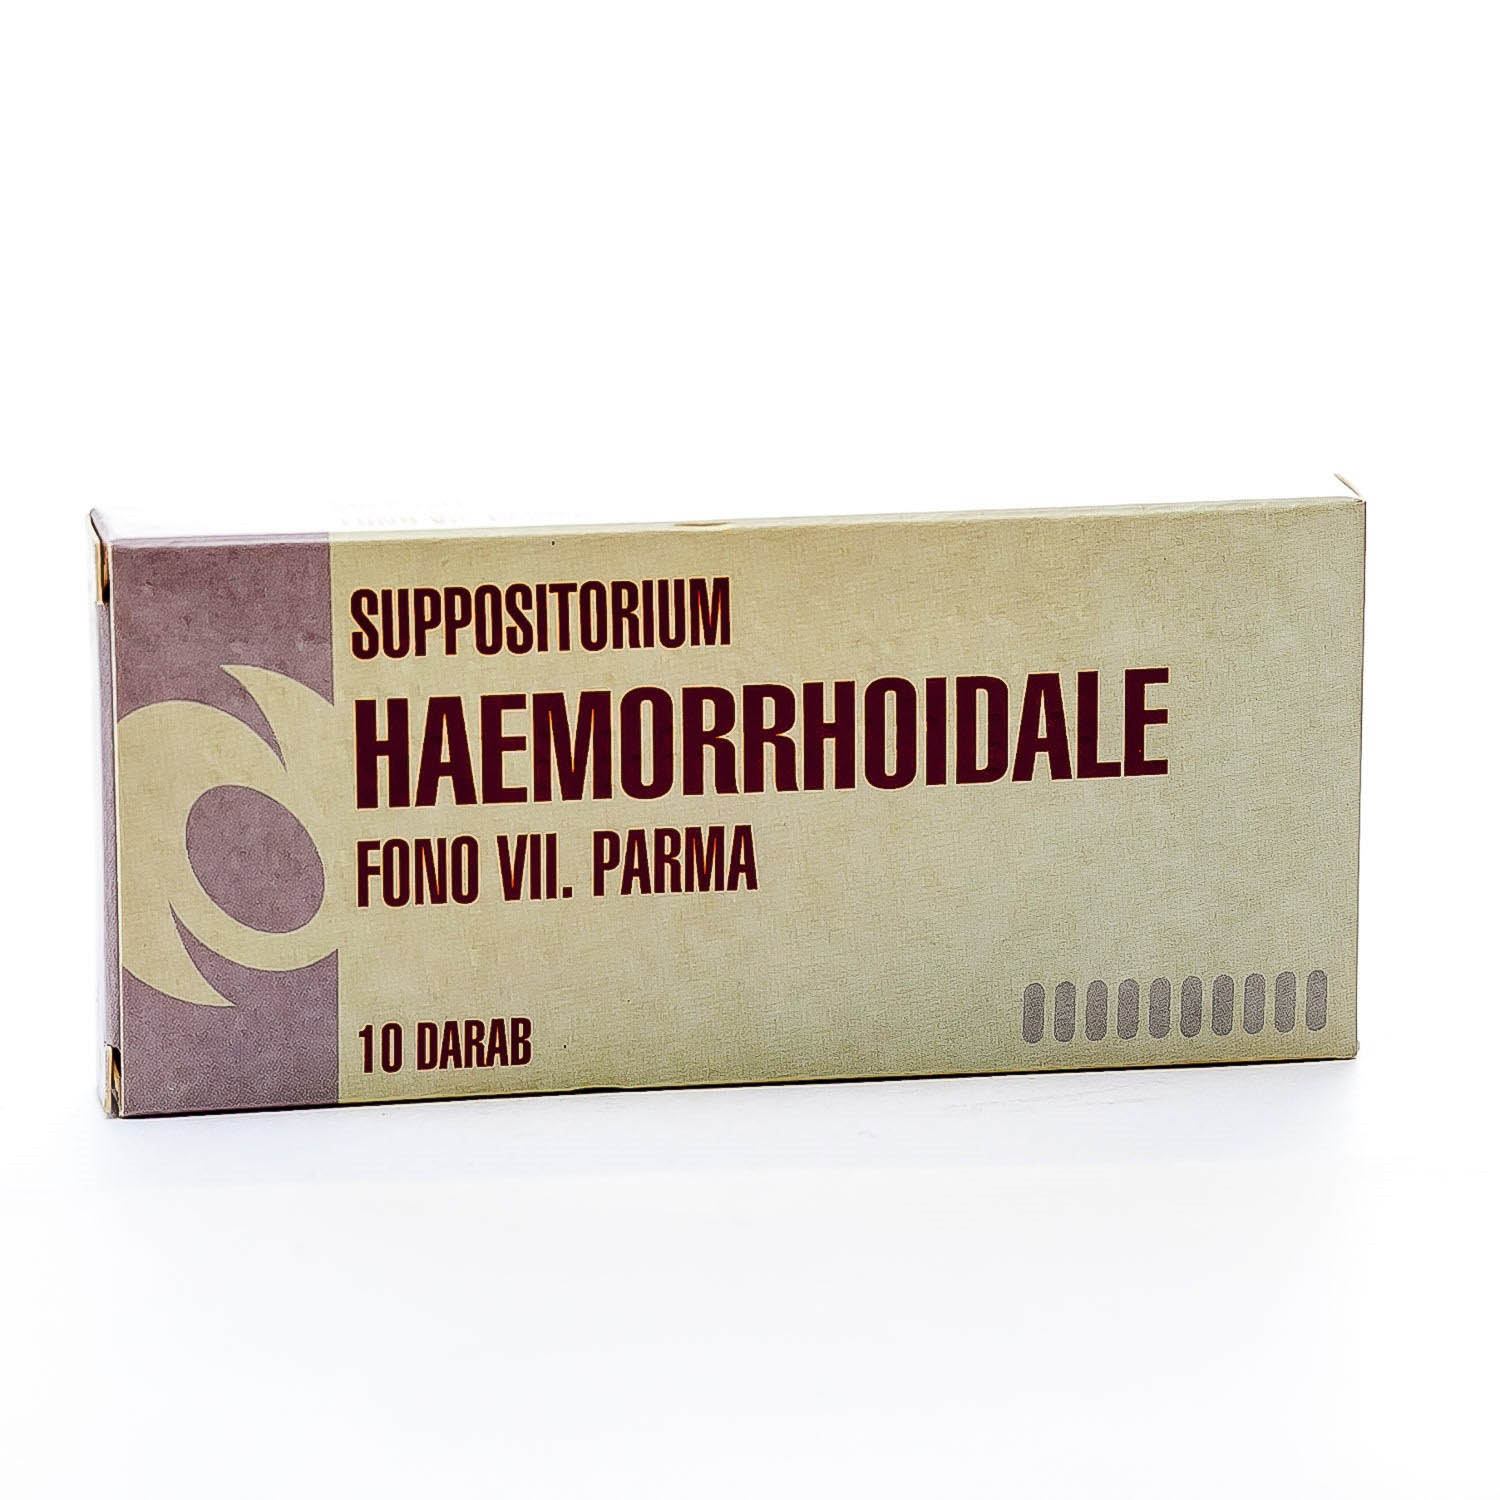 SUPP HAEMORRHOIDALE FONOVII 10X PARMA